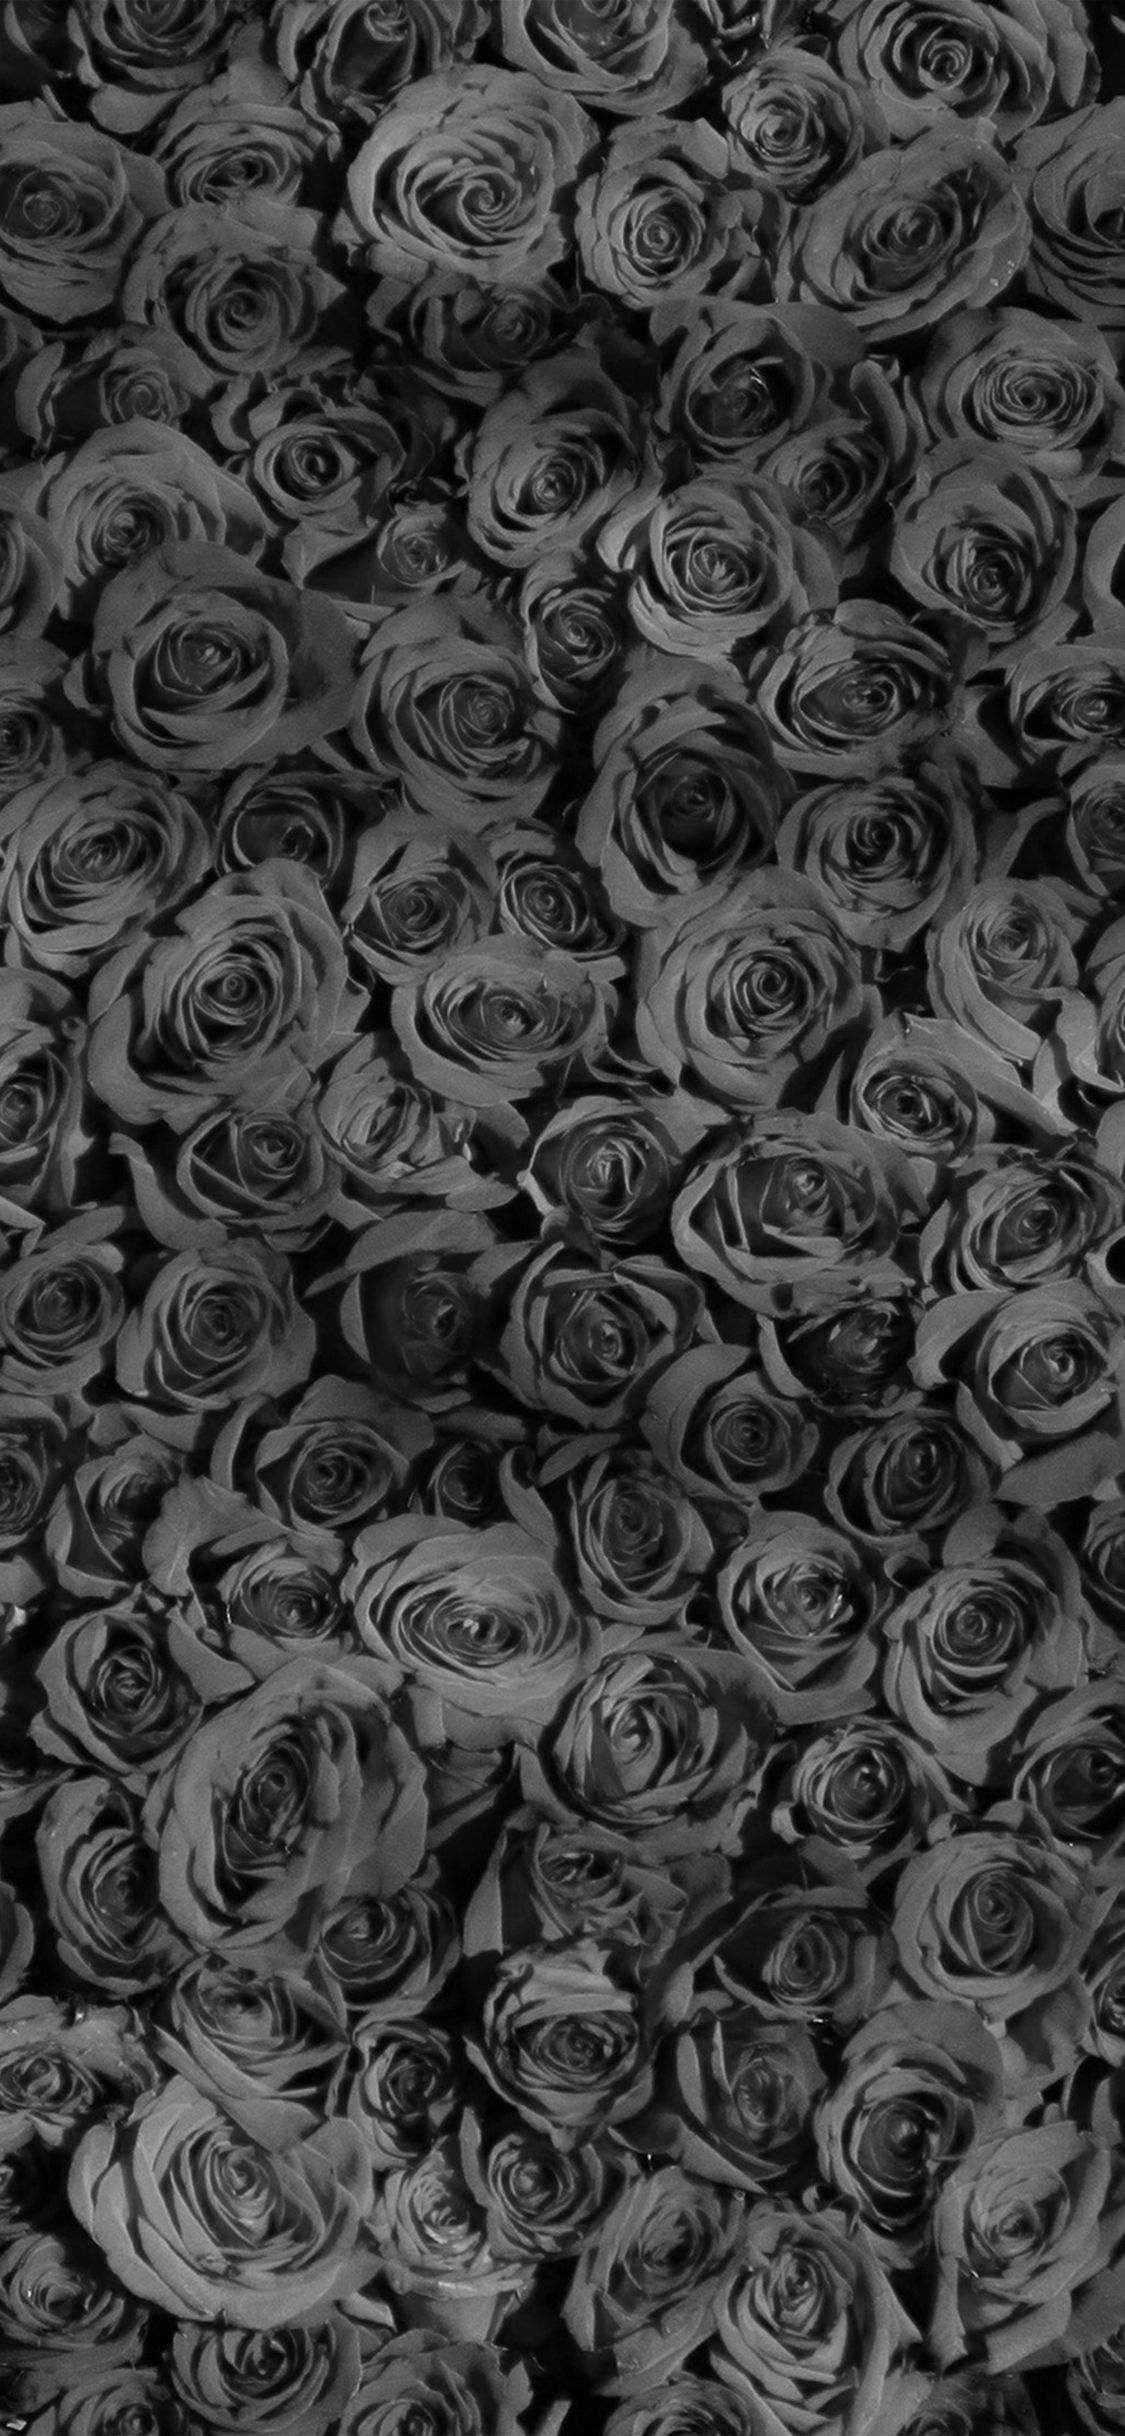 Black Roses Iphone Wallpapers On Wallpaperdog